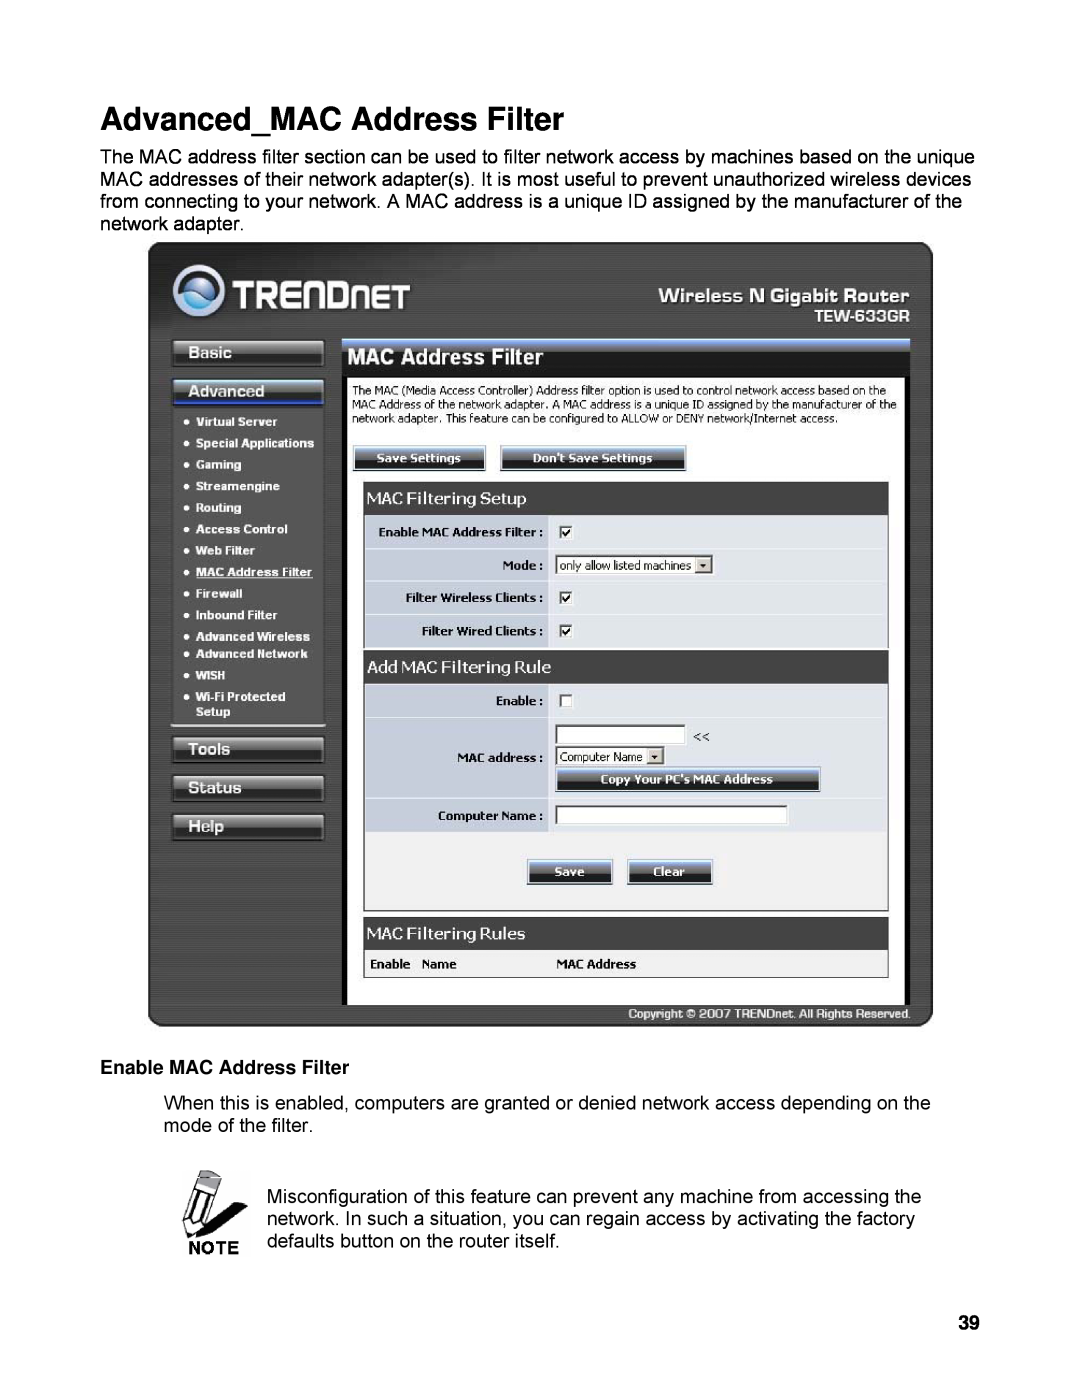 TRENDnet TEW-633GR manual AdvancedMAC Address Filter, Enable MAC Address Filter 